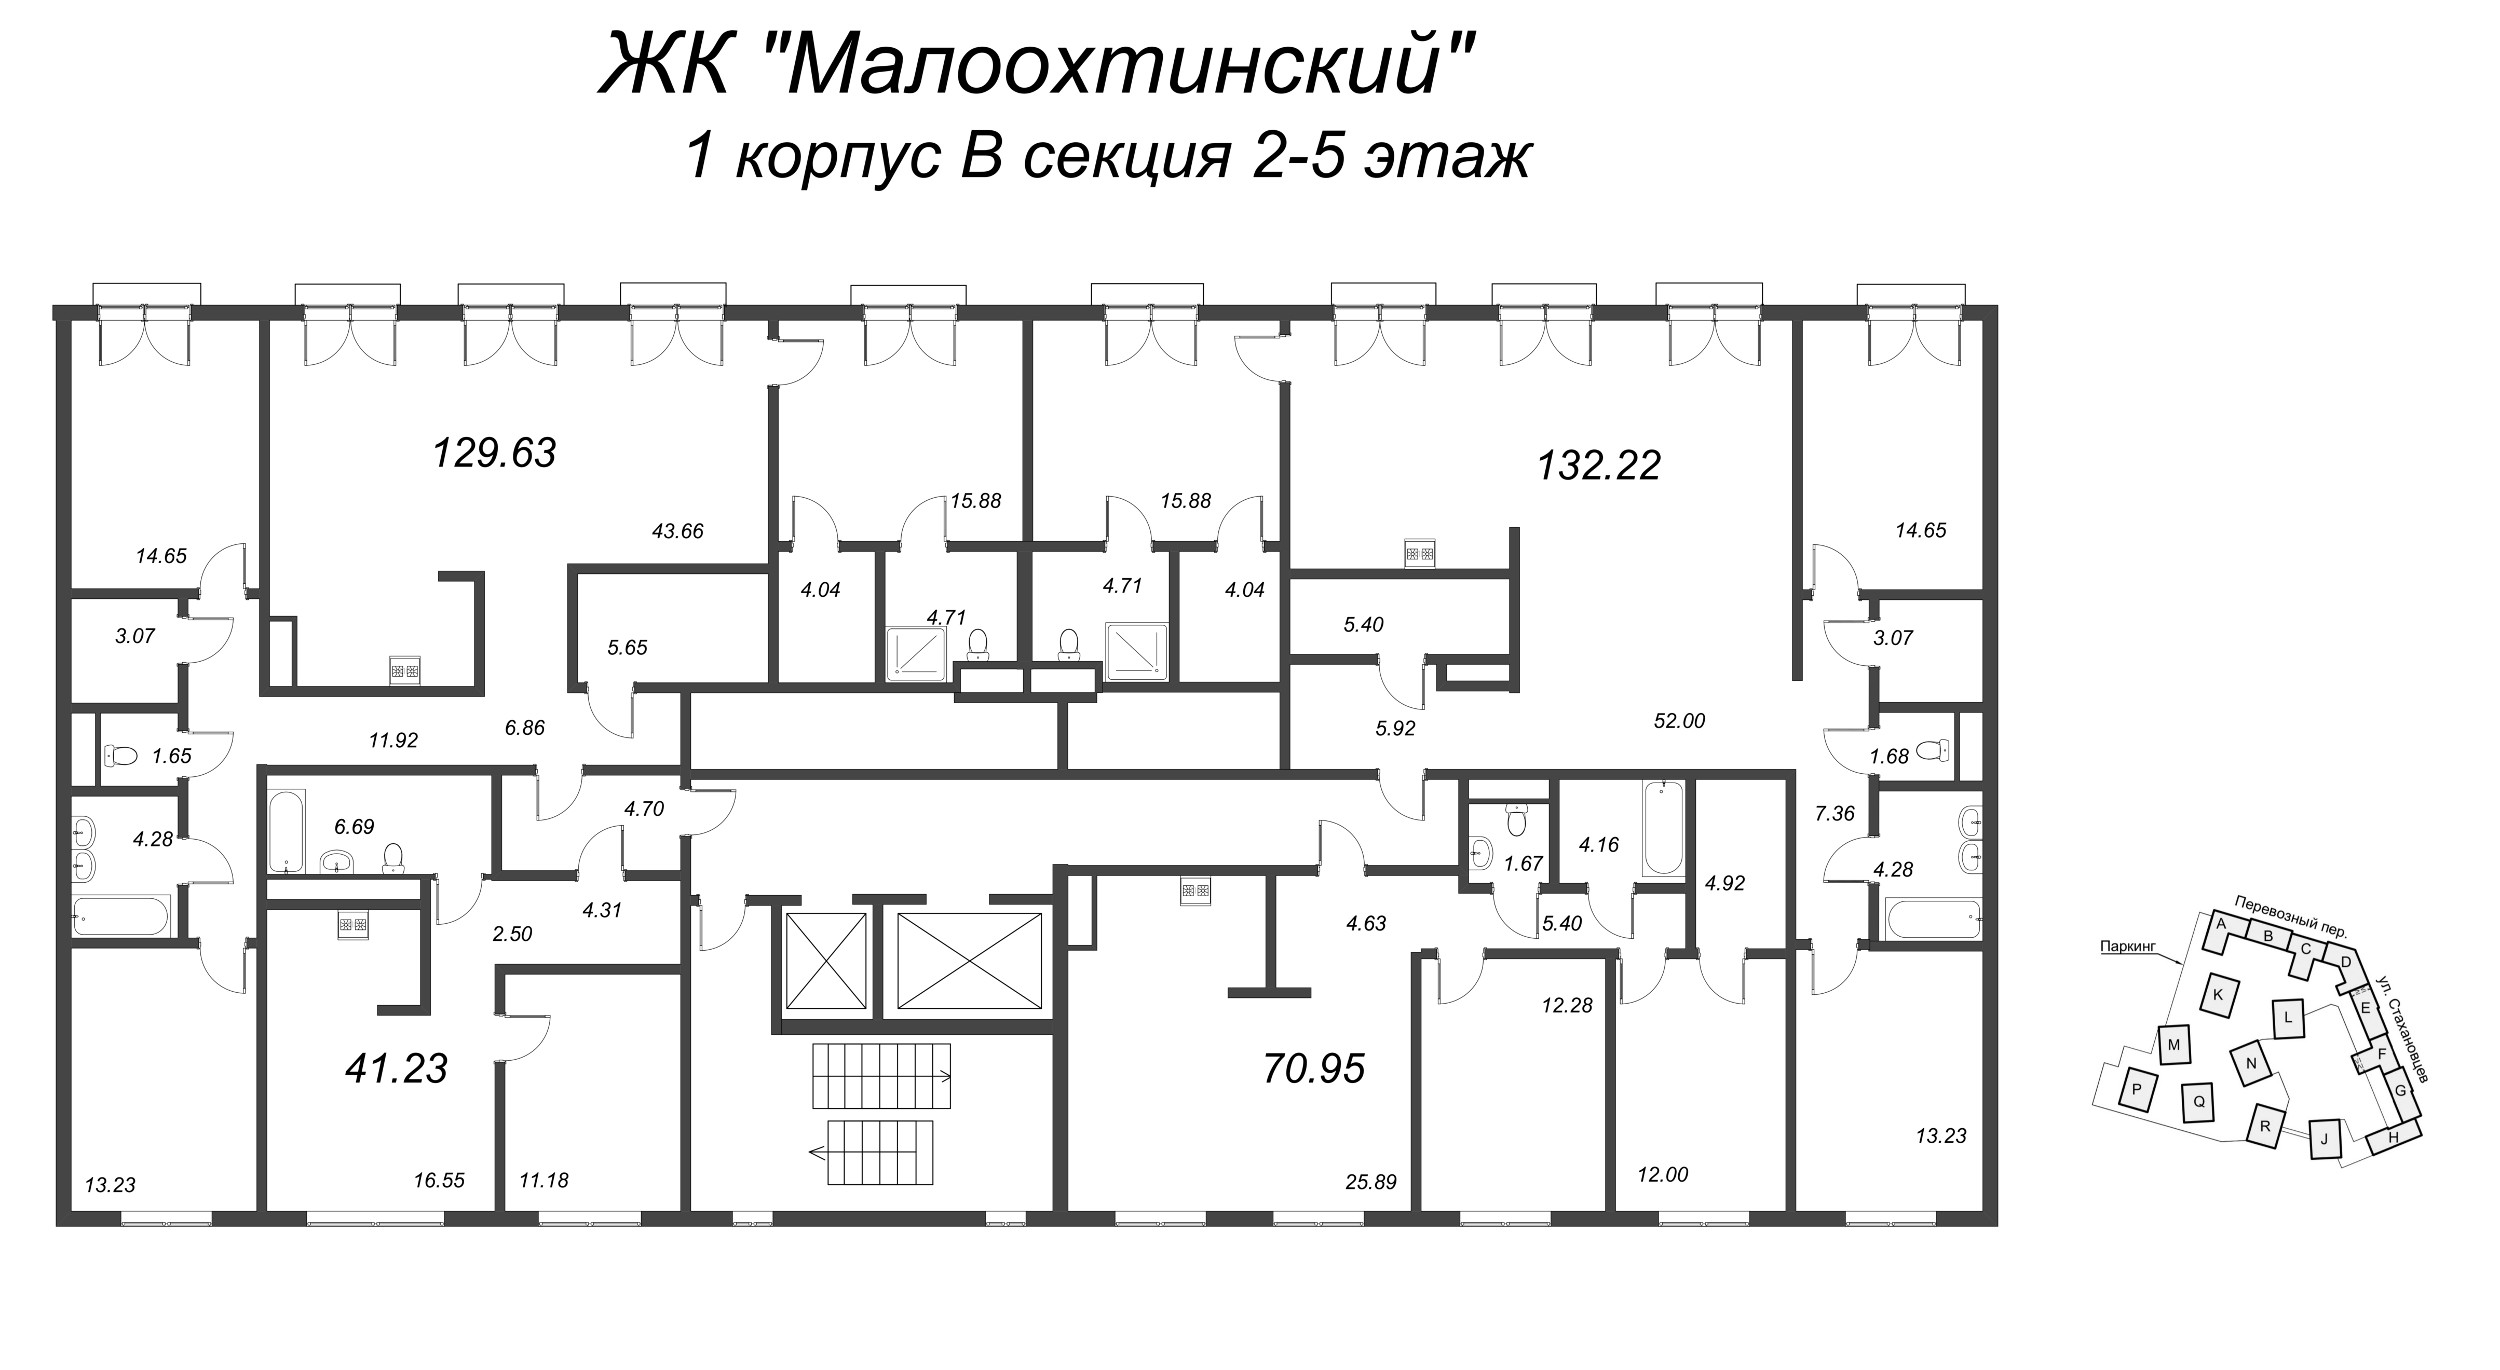 4-комнатная (Евро) квартира, 132 м² - планировка этажа